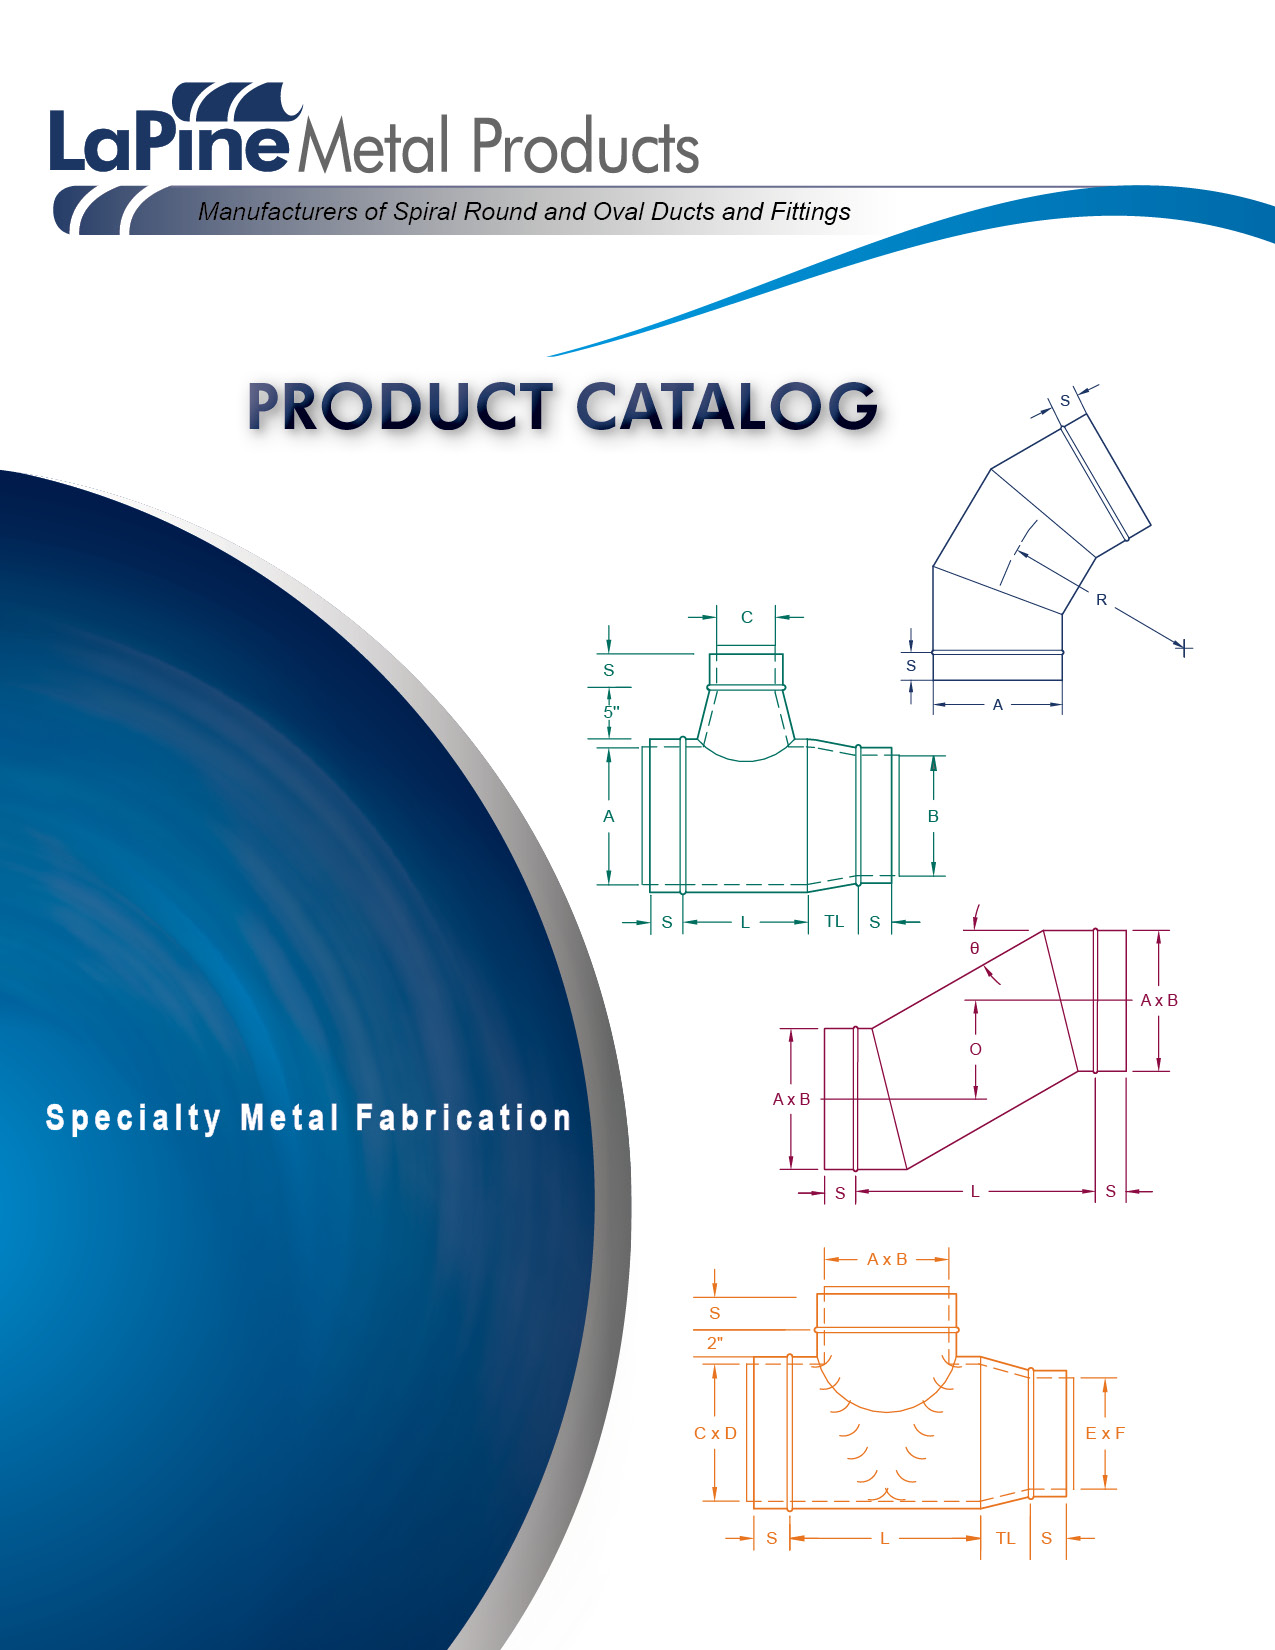 LaPine Metal Products Catalog Design